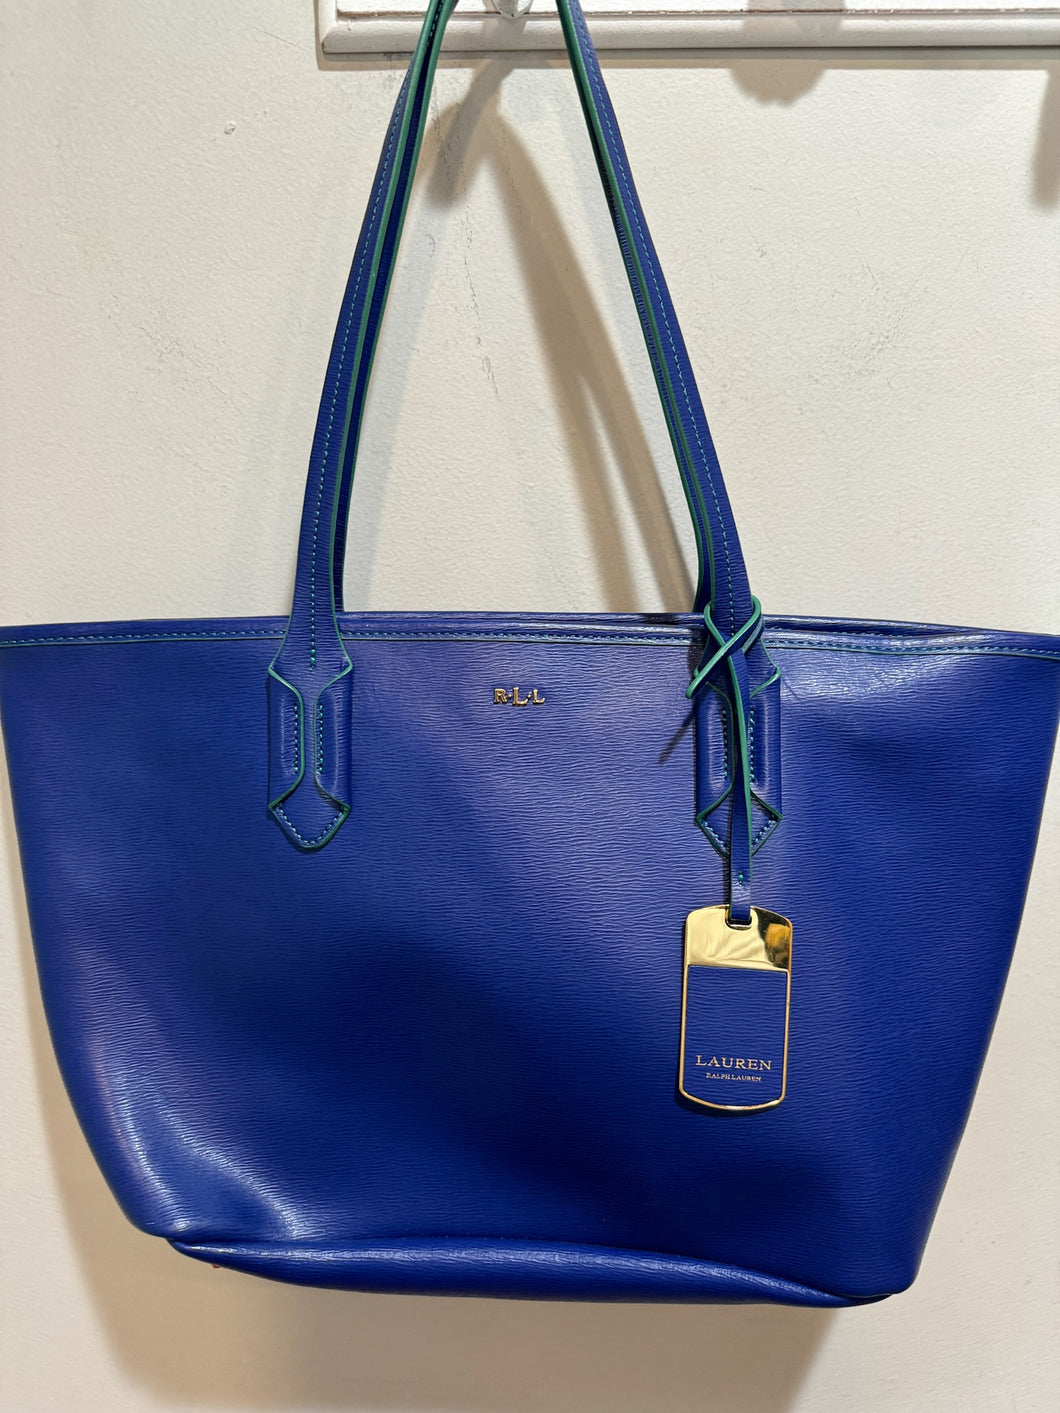 Ralph Lauren Blue Leather Tote Bag